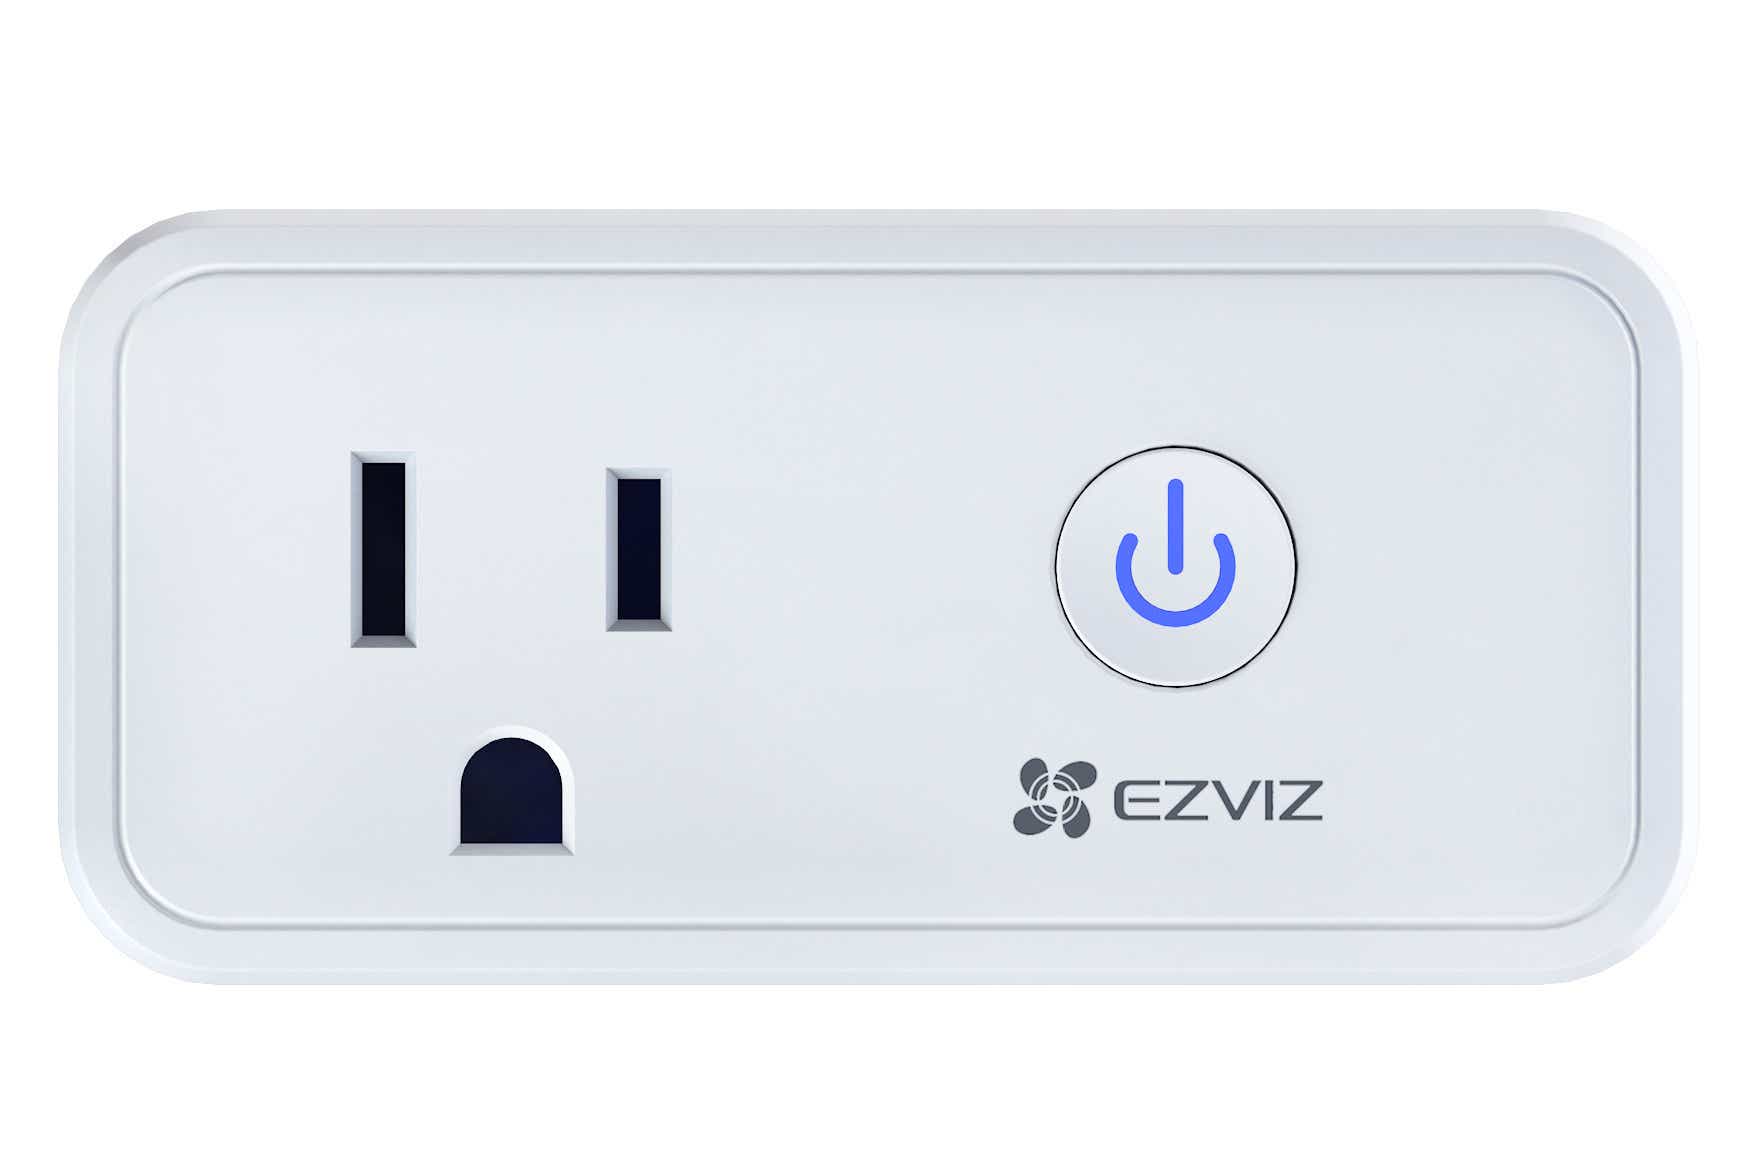 EZVIZ Smart Plug (model T30-10B-US)